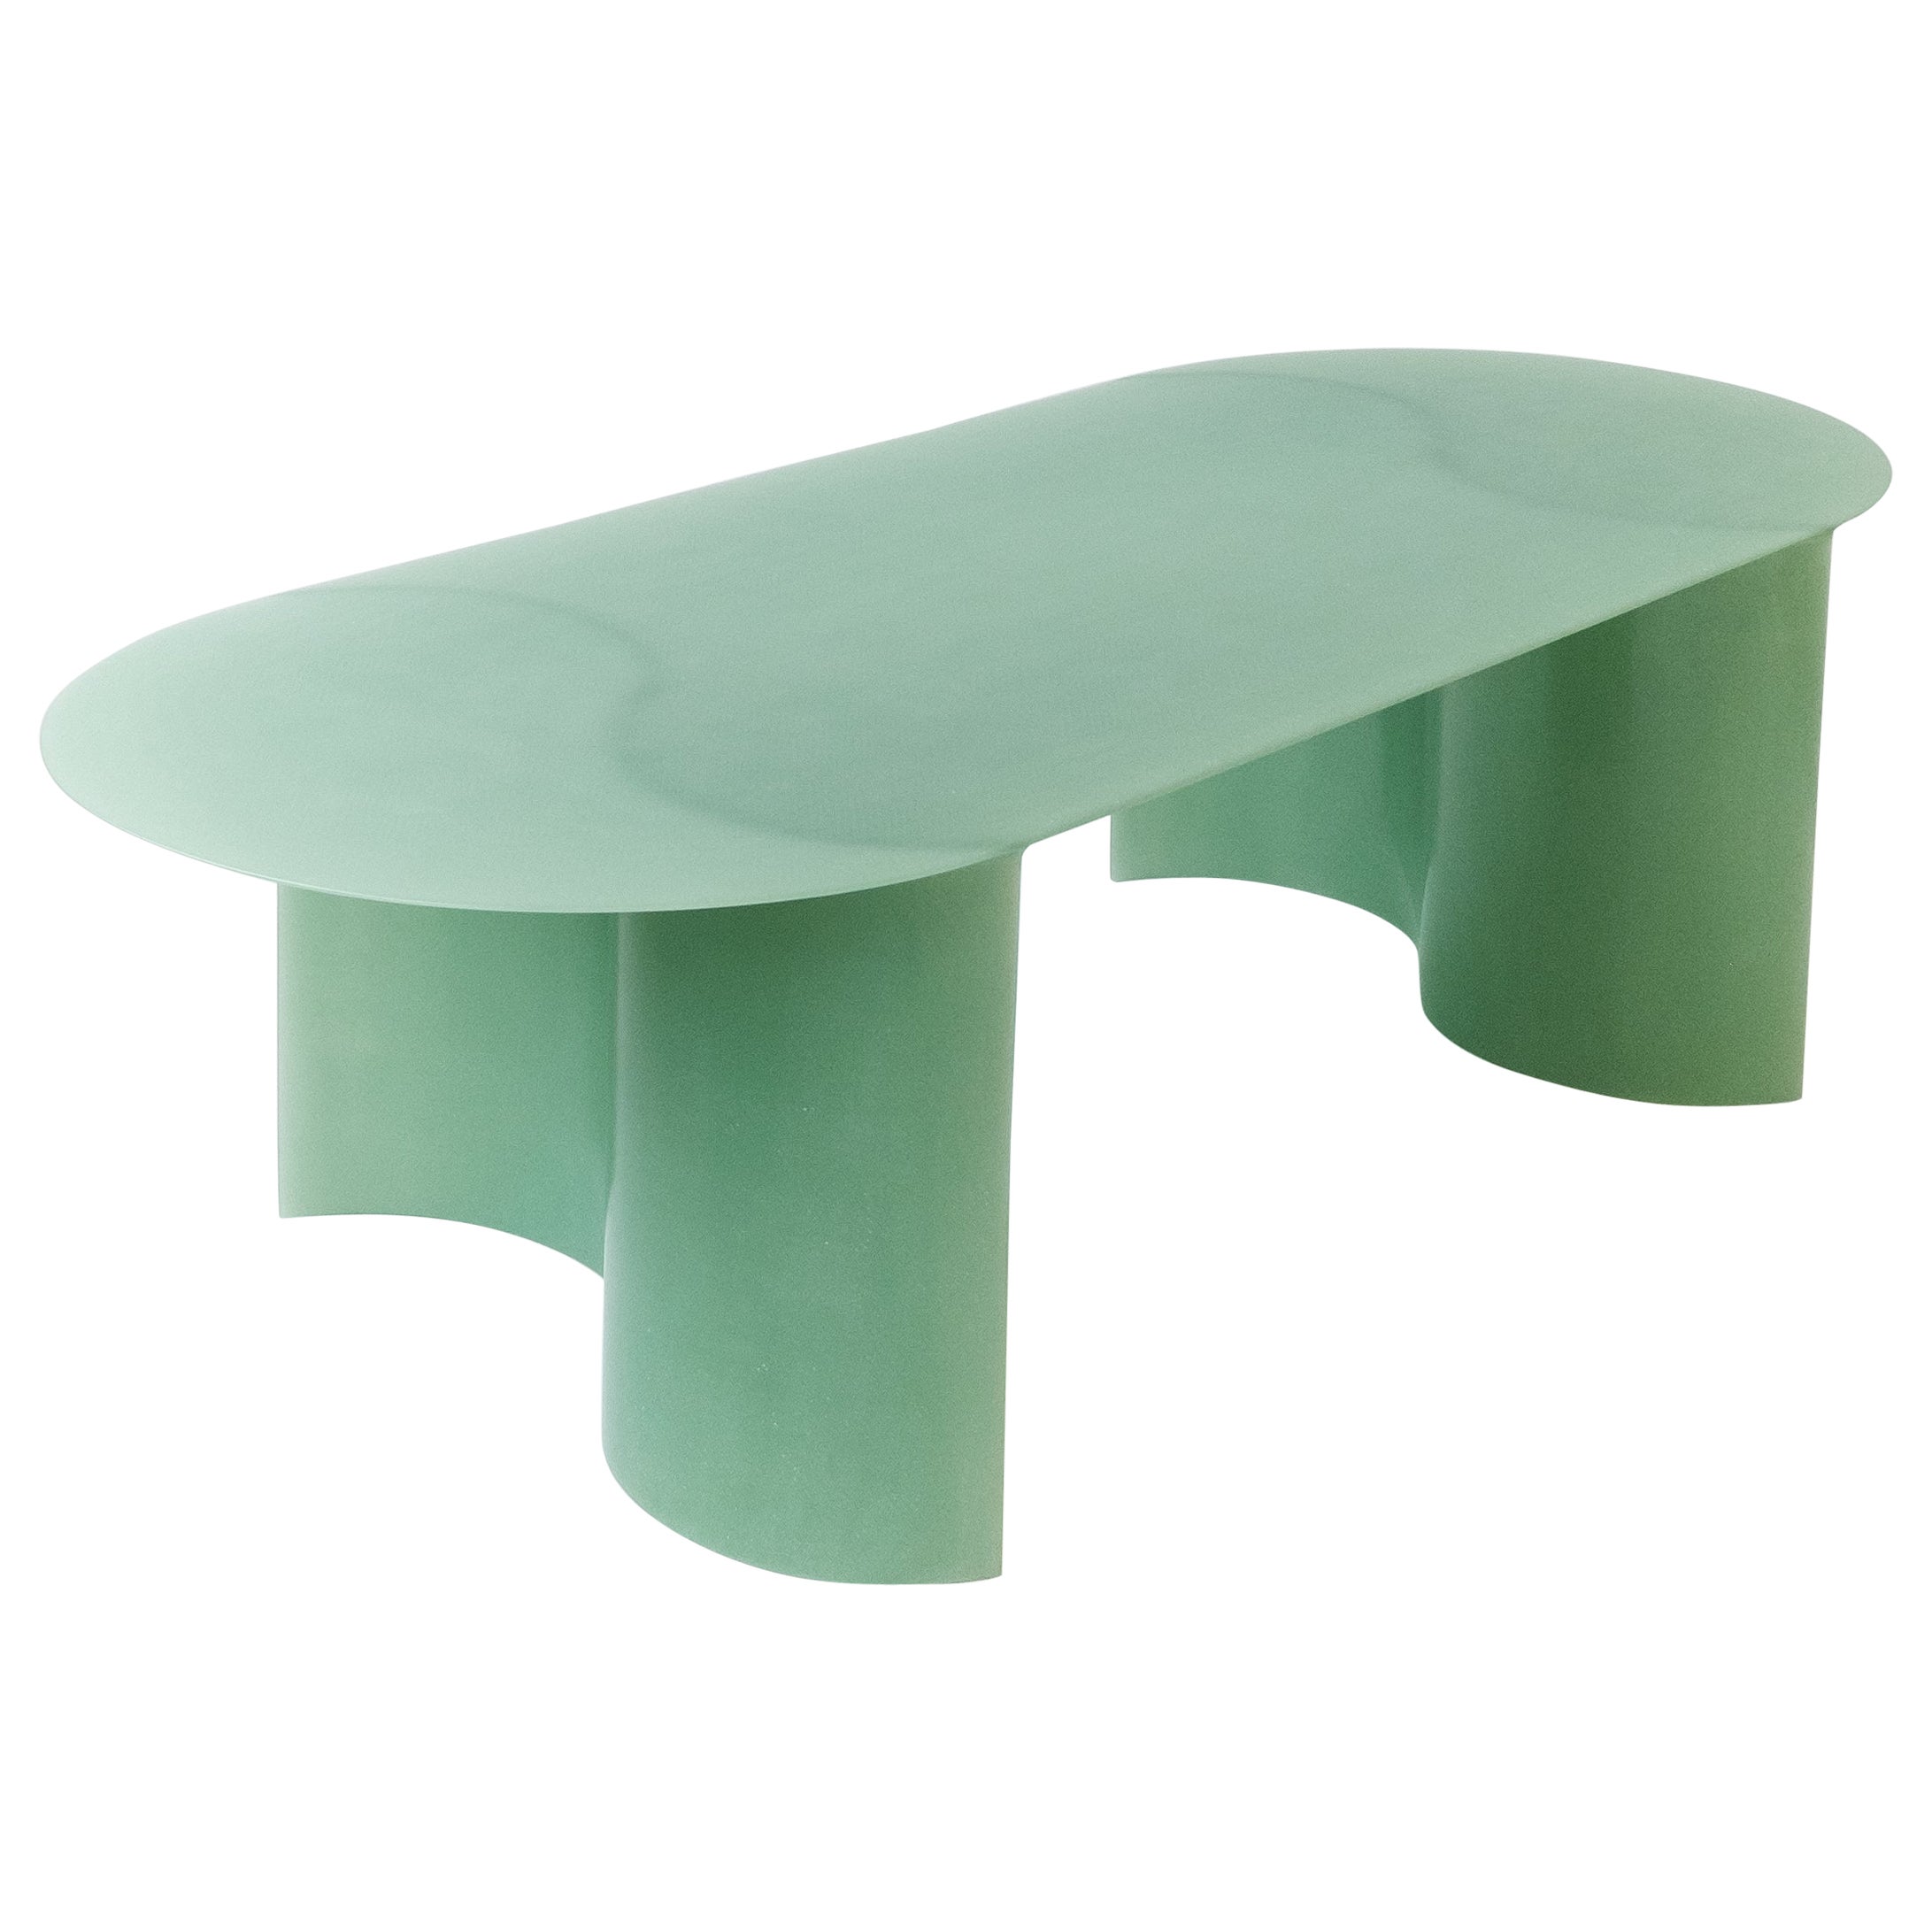 Table basse contemporaine en fibre de verre verte, New Wave Big, par Lukas Cober en vente